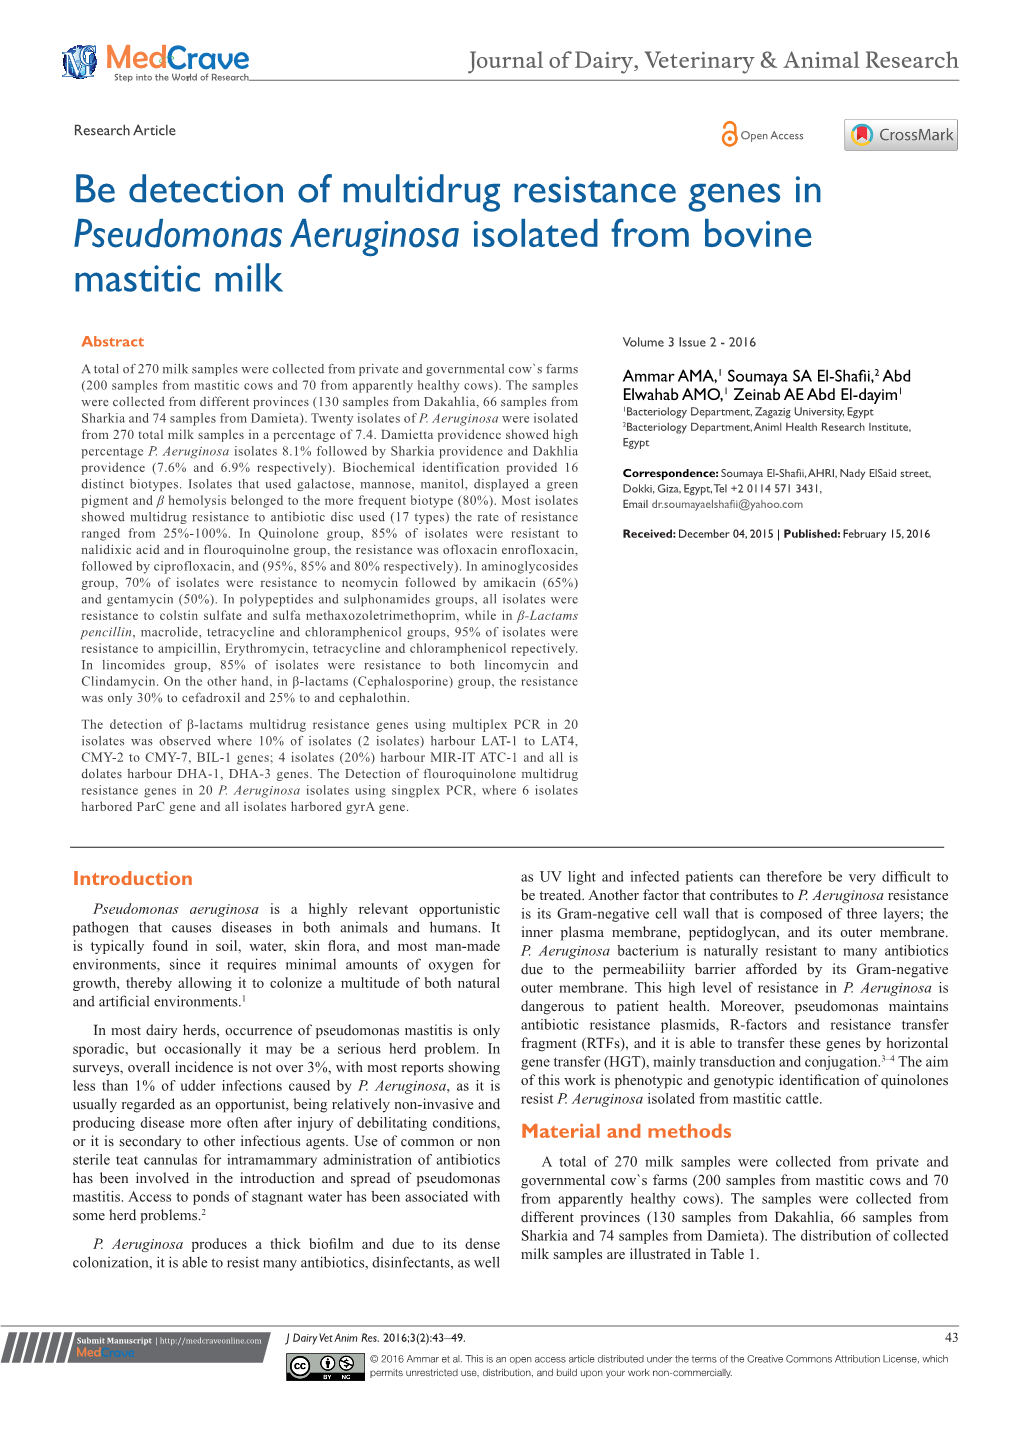 Pseudomonas Aeruginosa Isolated from Bovine Mastitic Milk